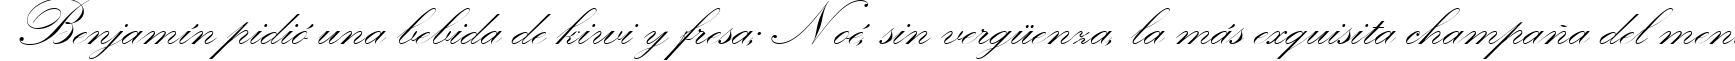 Пример написания шрифтом KunstlerschreibschDMed текста на испанском